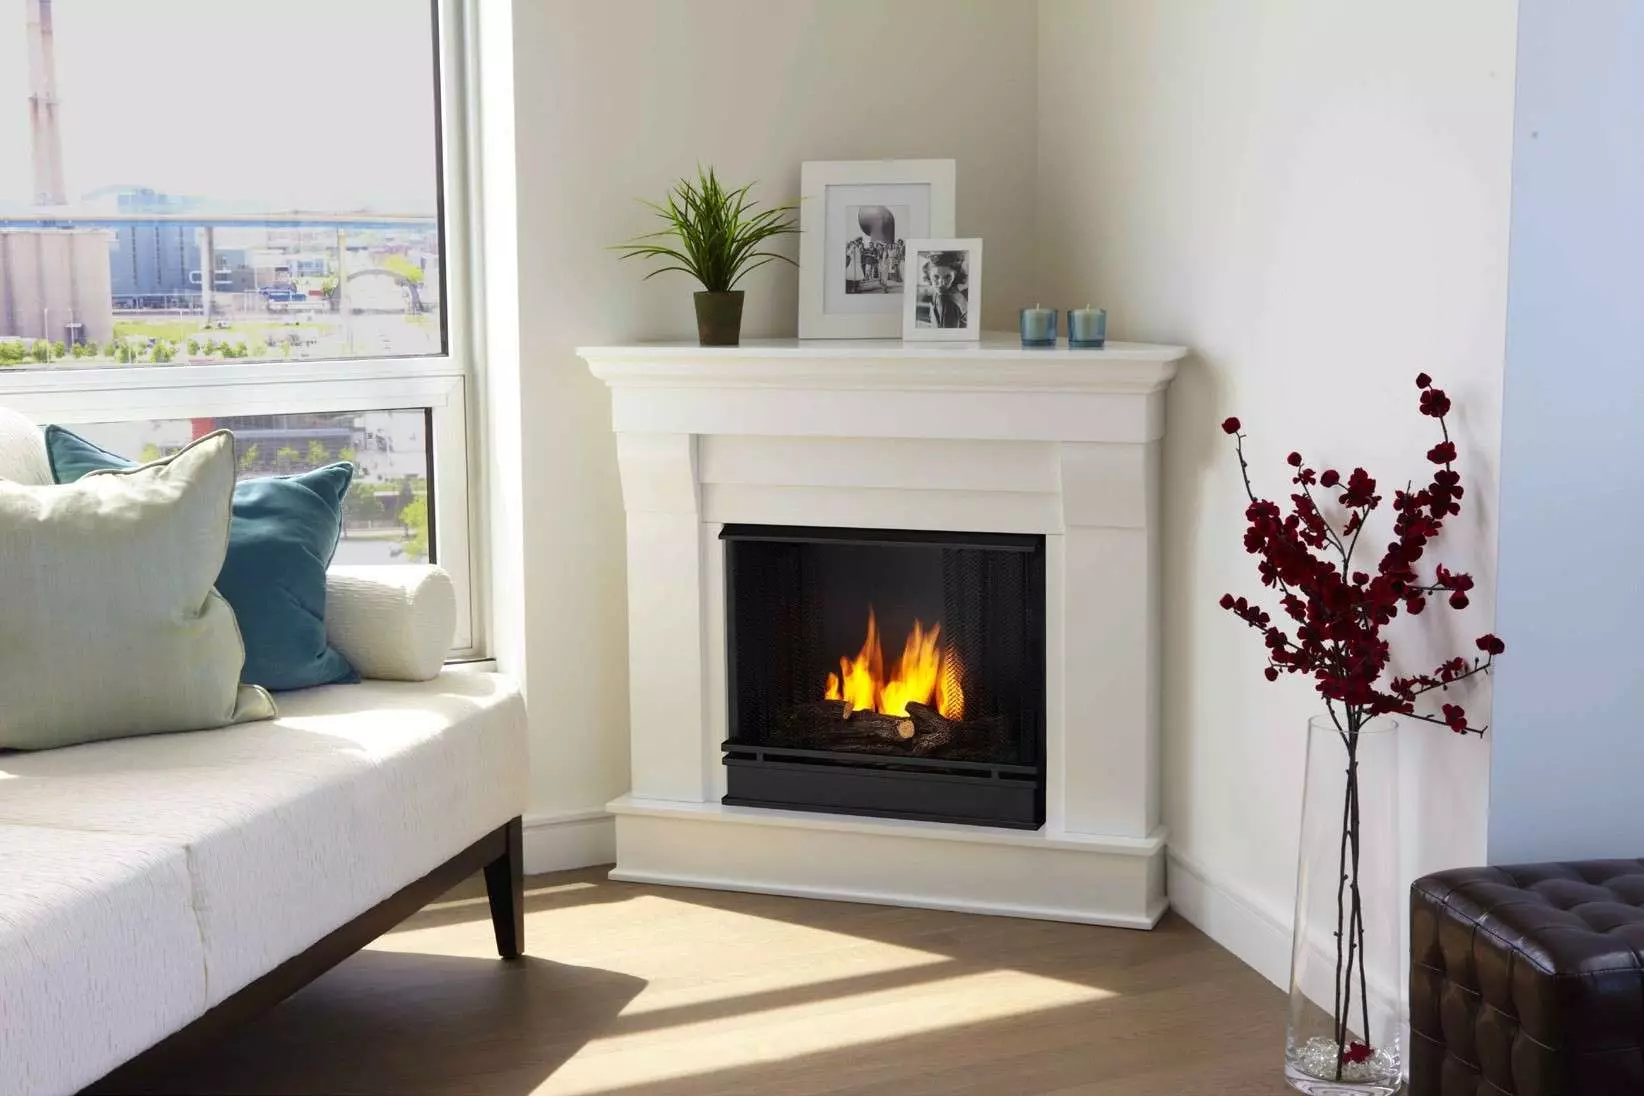 [Savings] Gypsum Carton Fireplace: Luxury inapatikana kwa kila mtu